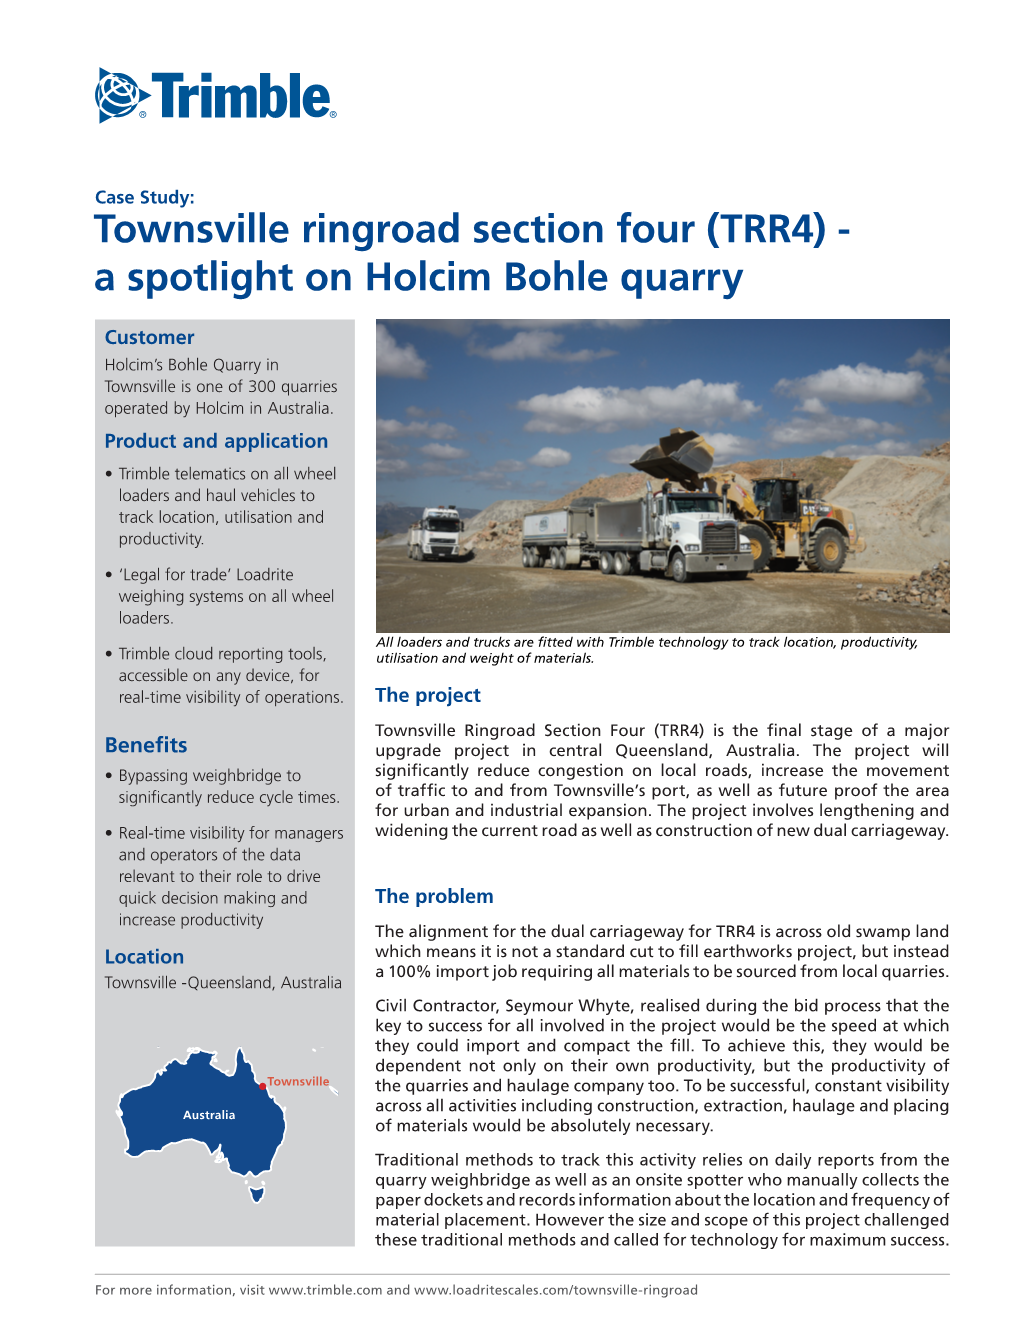 TRR4) - a Spotlight on Holcim Bohle Quarry